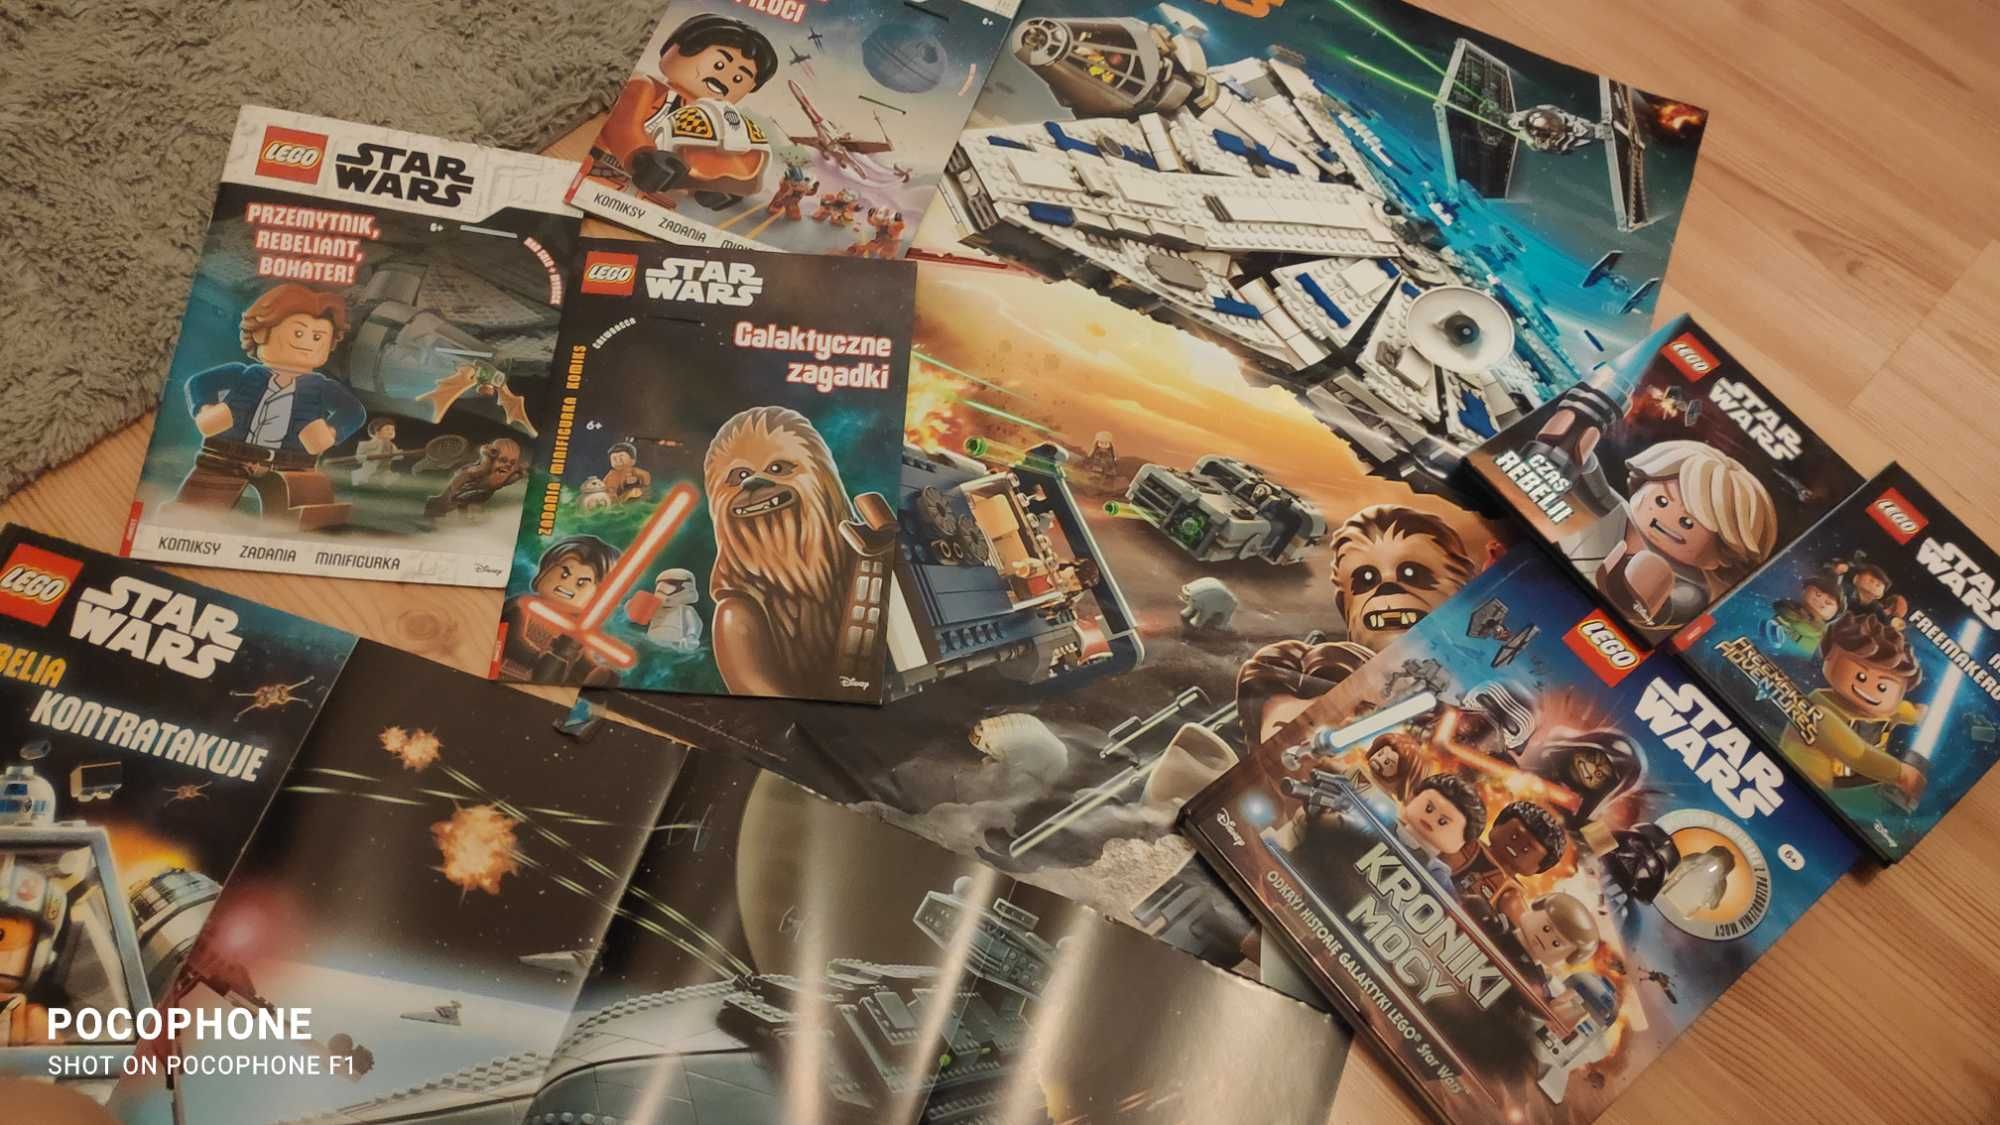 Książki LEGO star wars kroniki mocy misje czas rebelii plakat itp